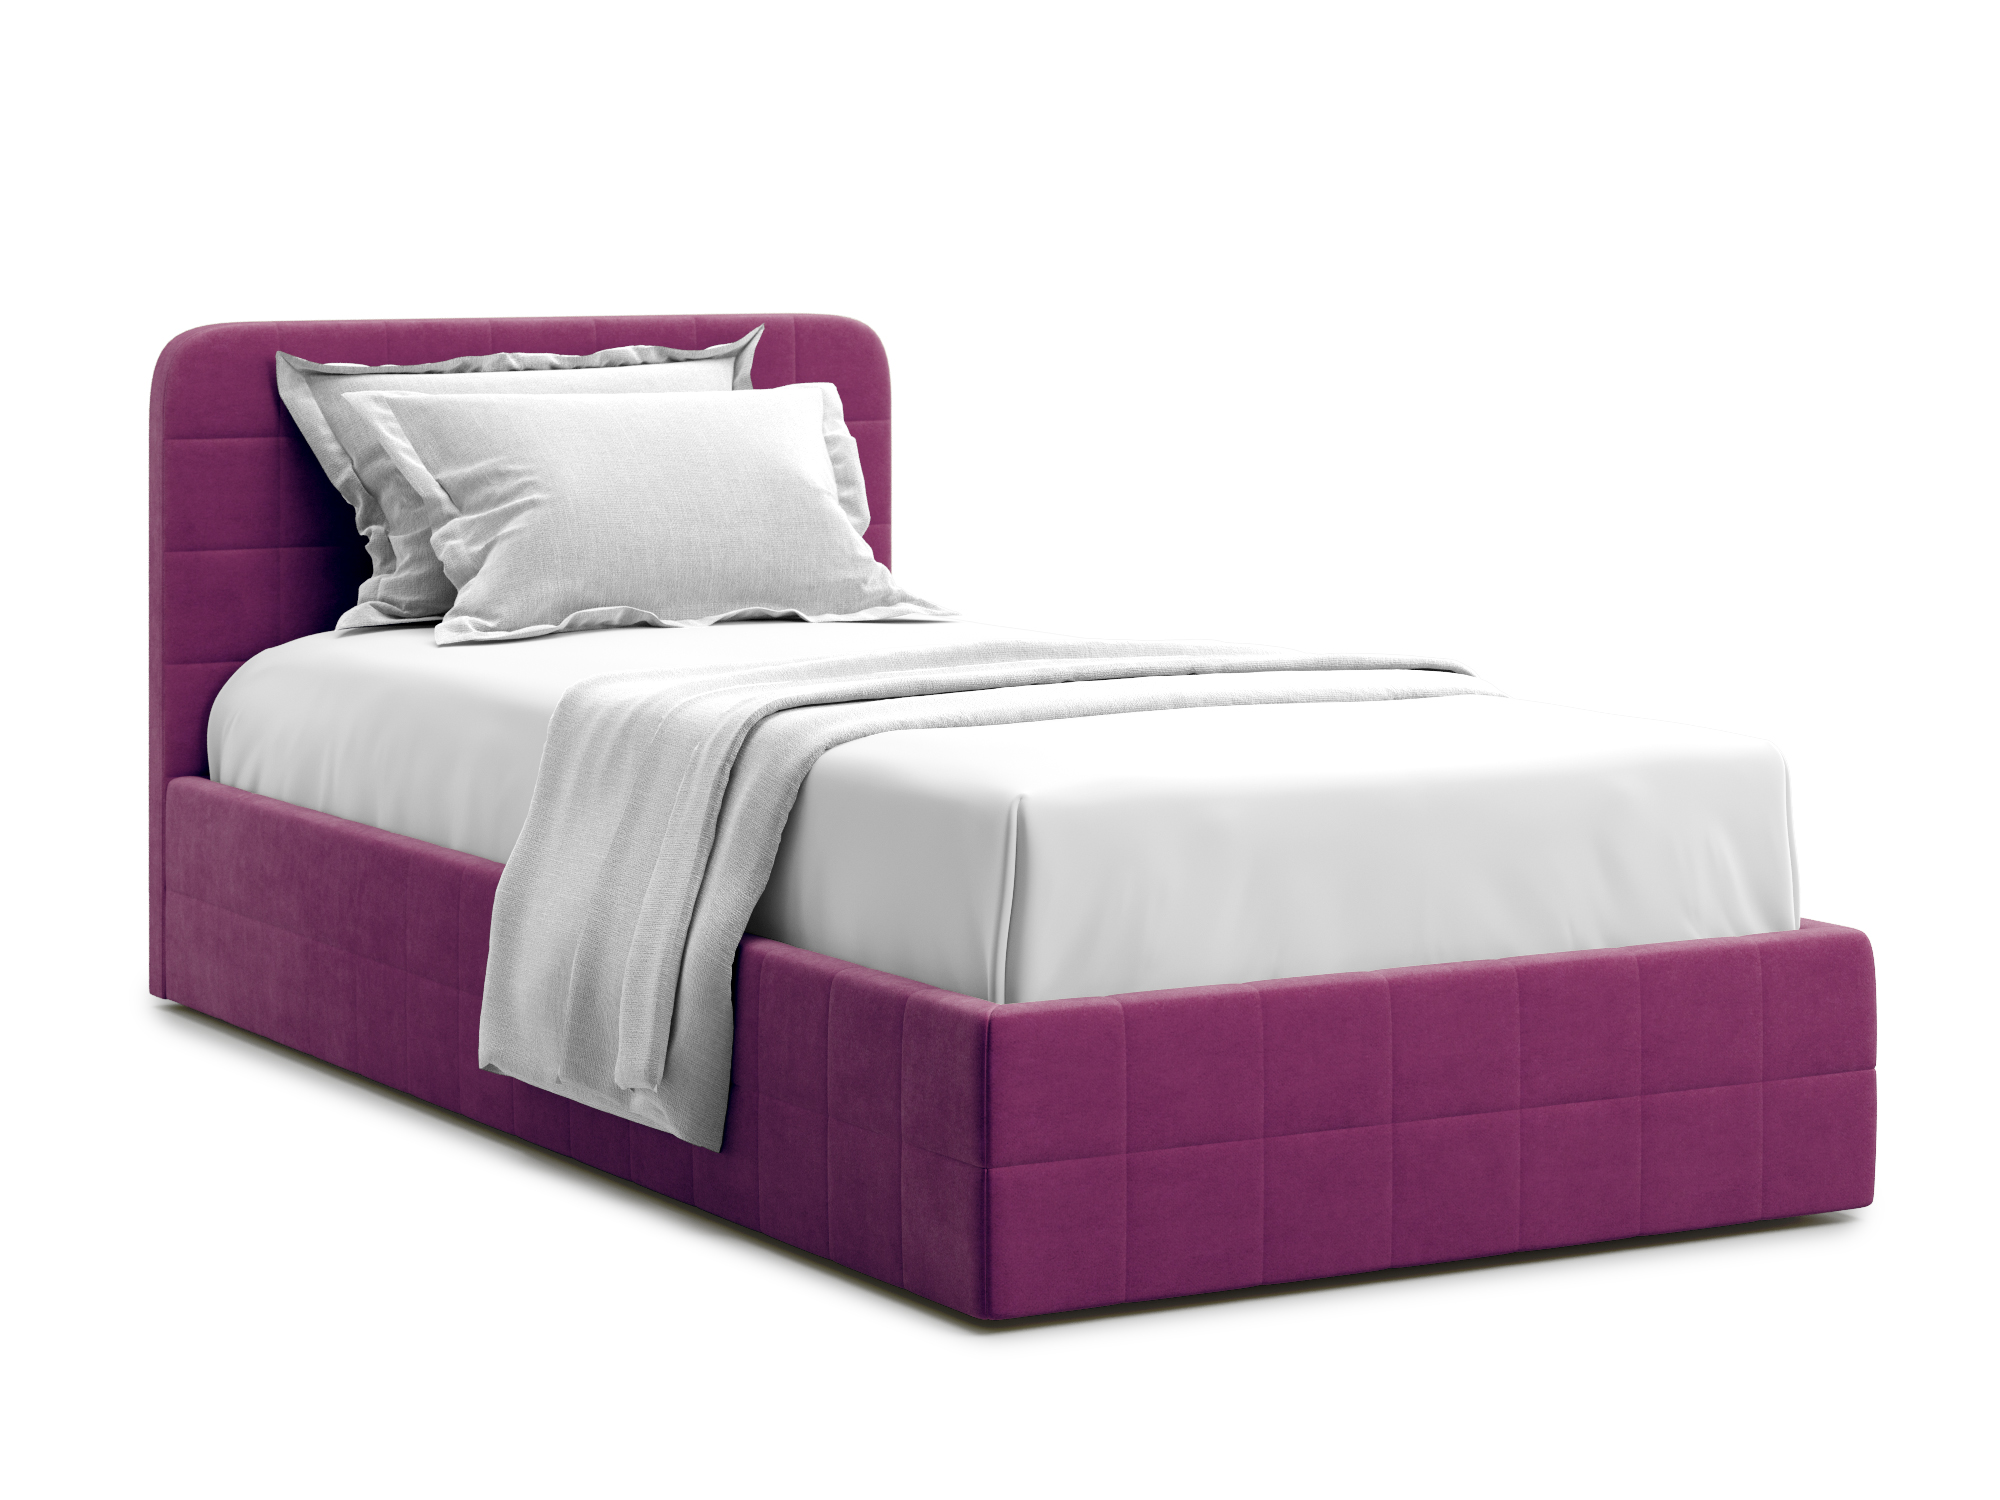 Кровать Adda 120 Velutto 15 Фиолетовый, Массив, ДСП кровать adda 120 velutto 17 бежевый массив дсп